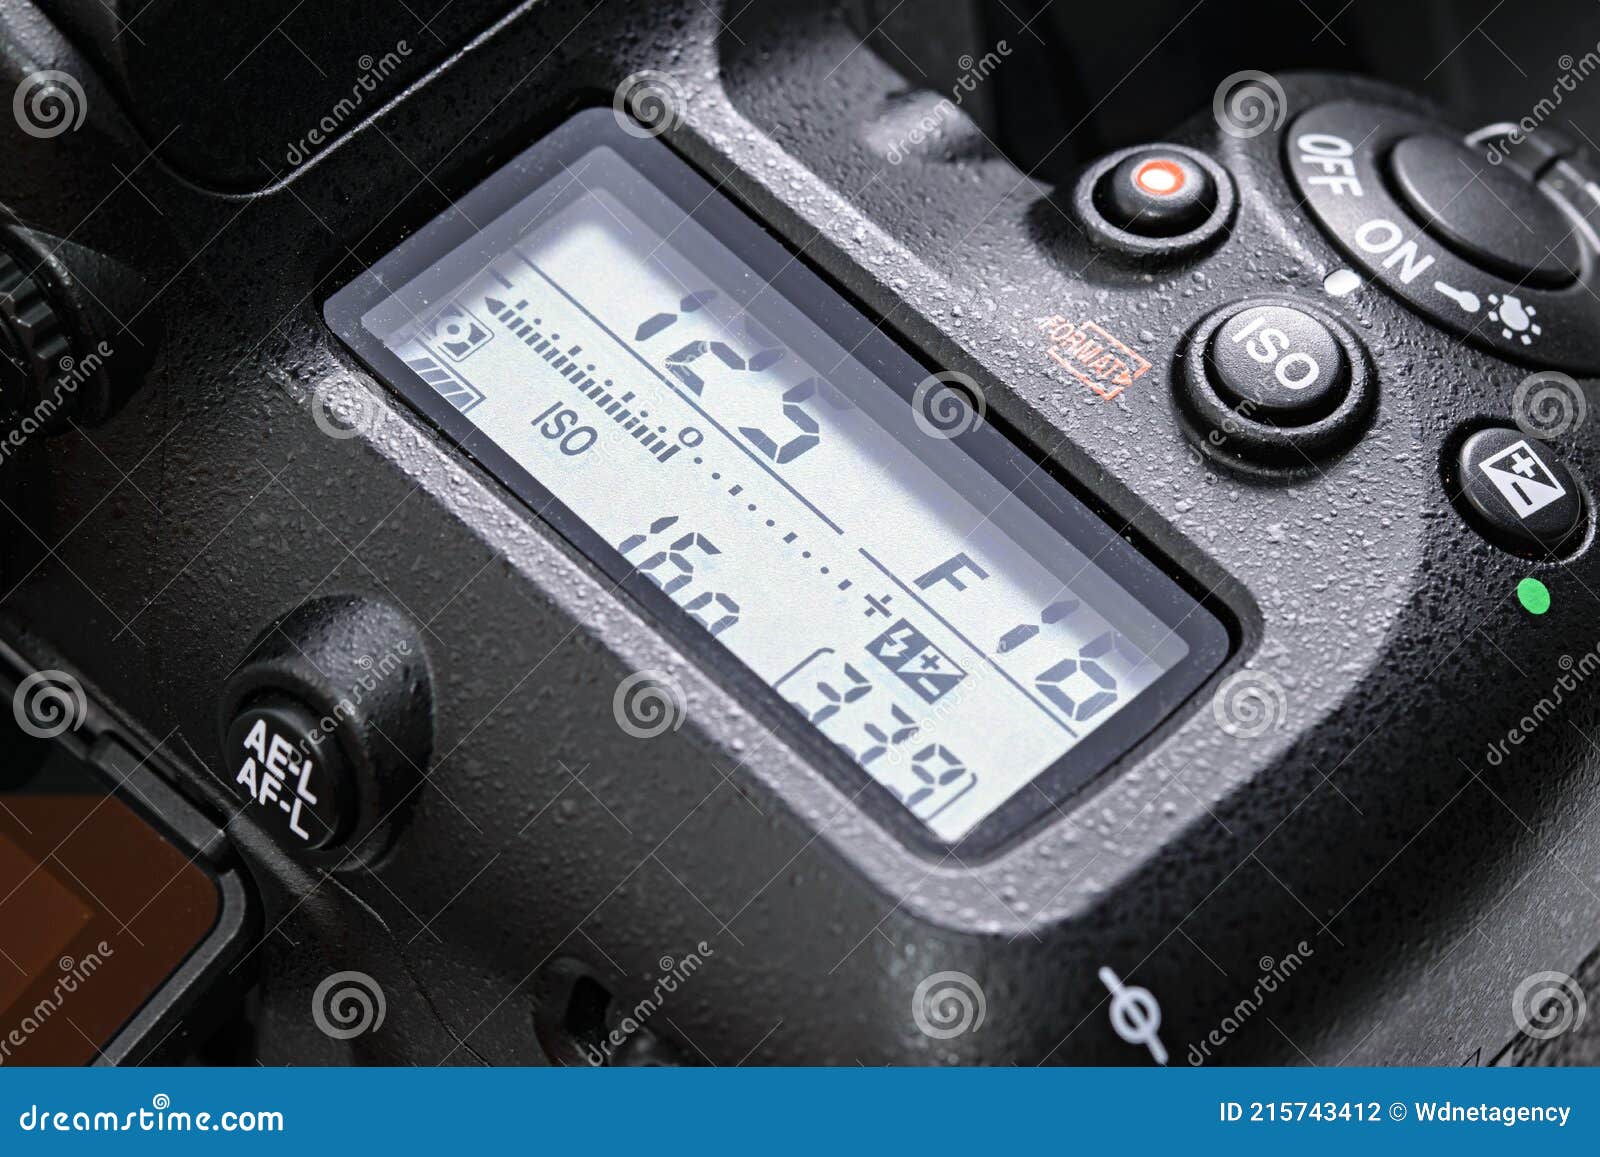 LCD Screen of Nikon D7500 DSLR Camera Editorial Photography